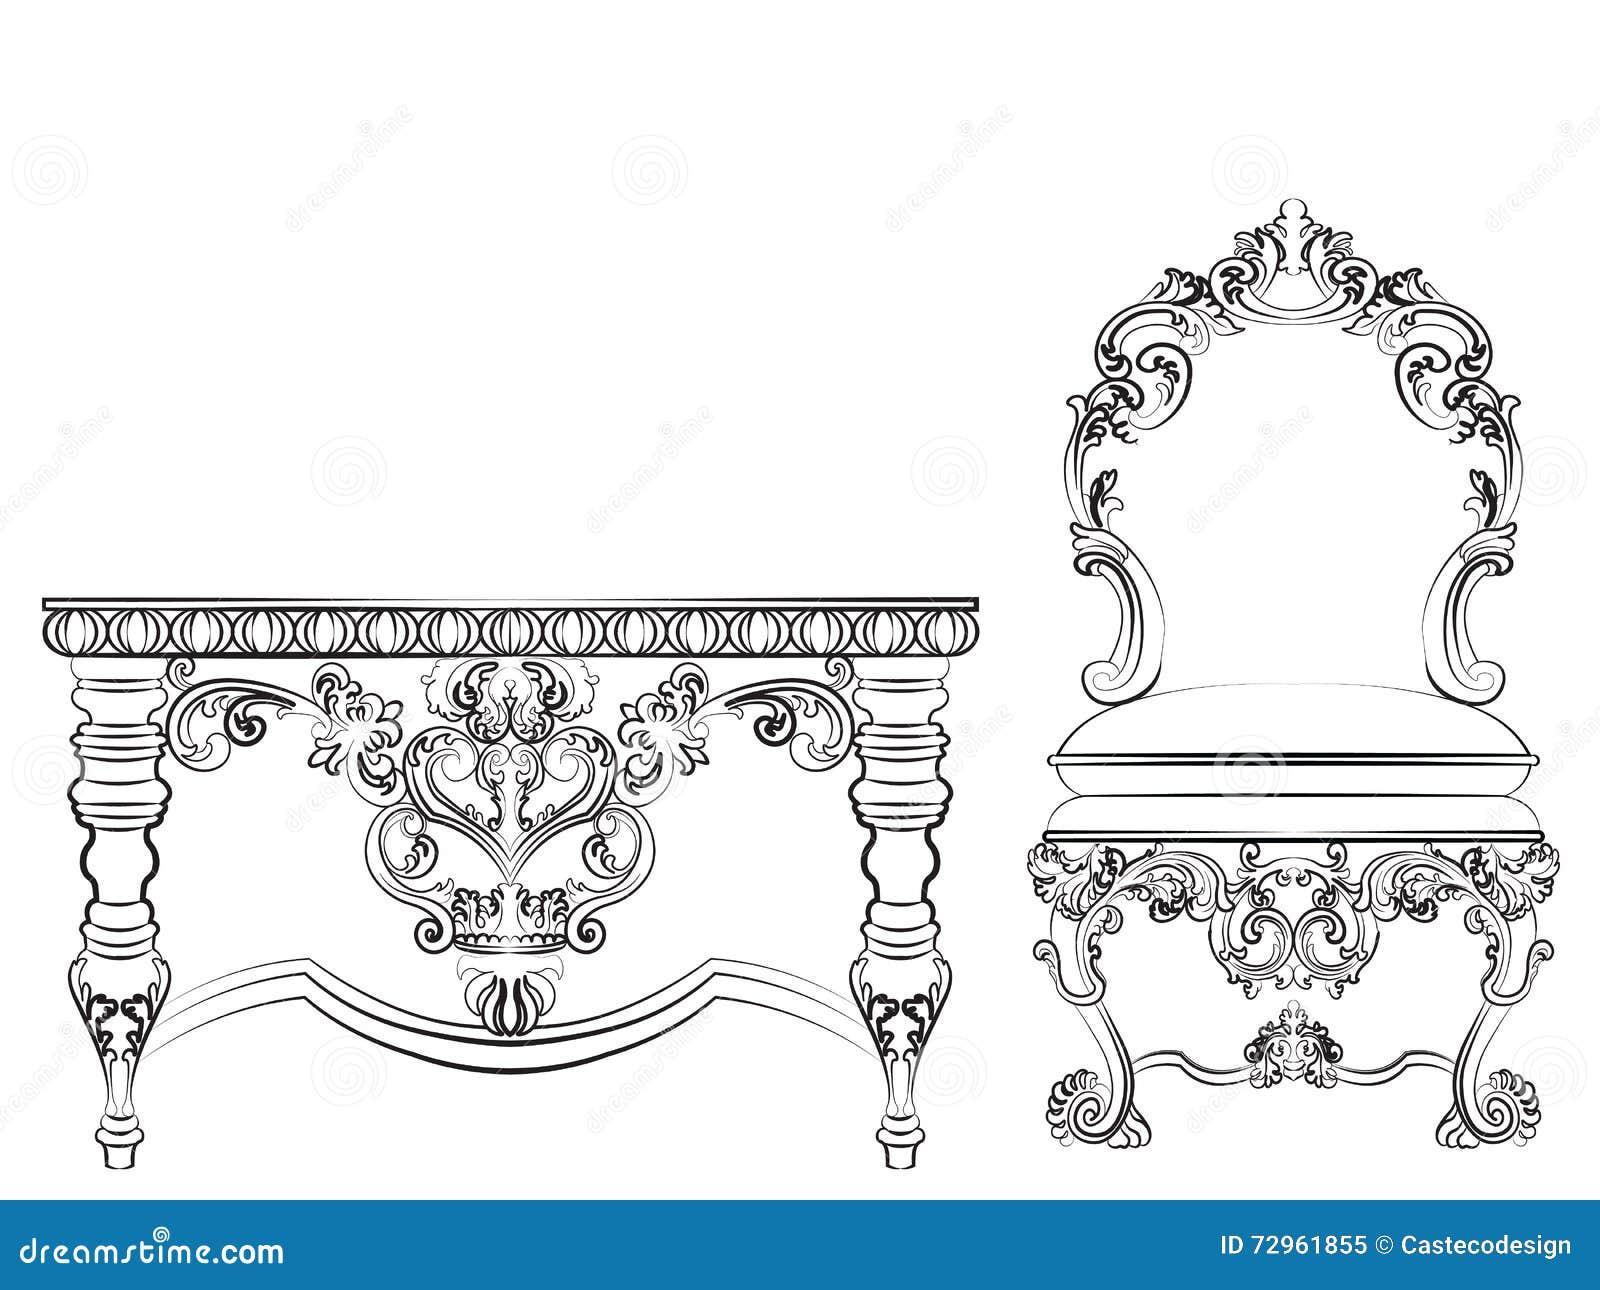 Baroque Furniture Vector Art PNG Images | Free Download On Pngtree